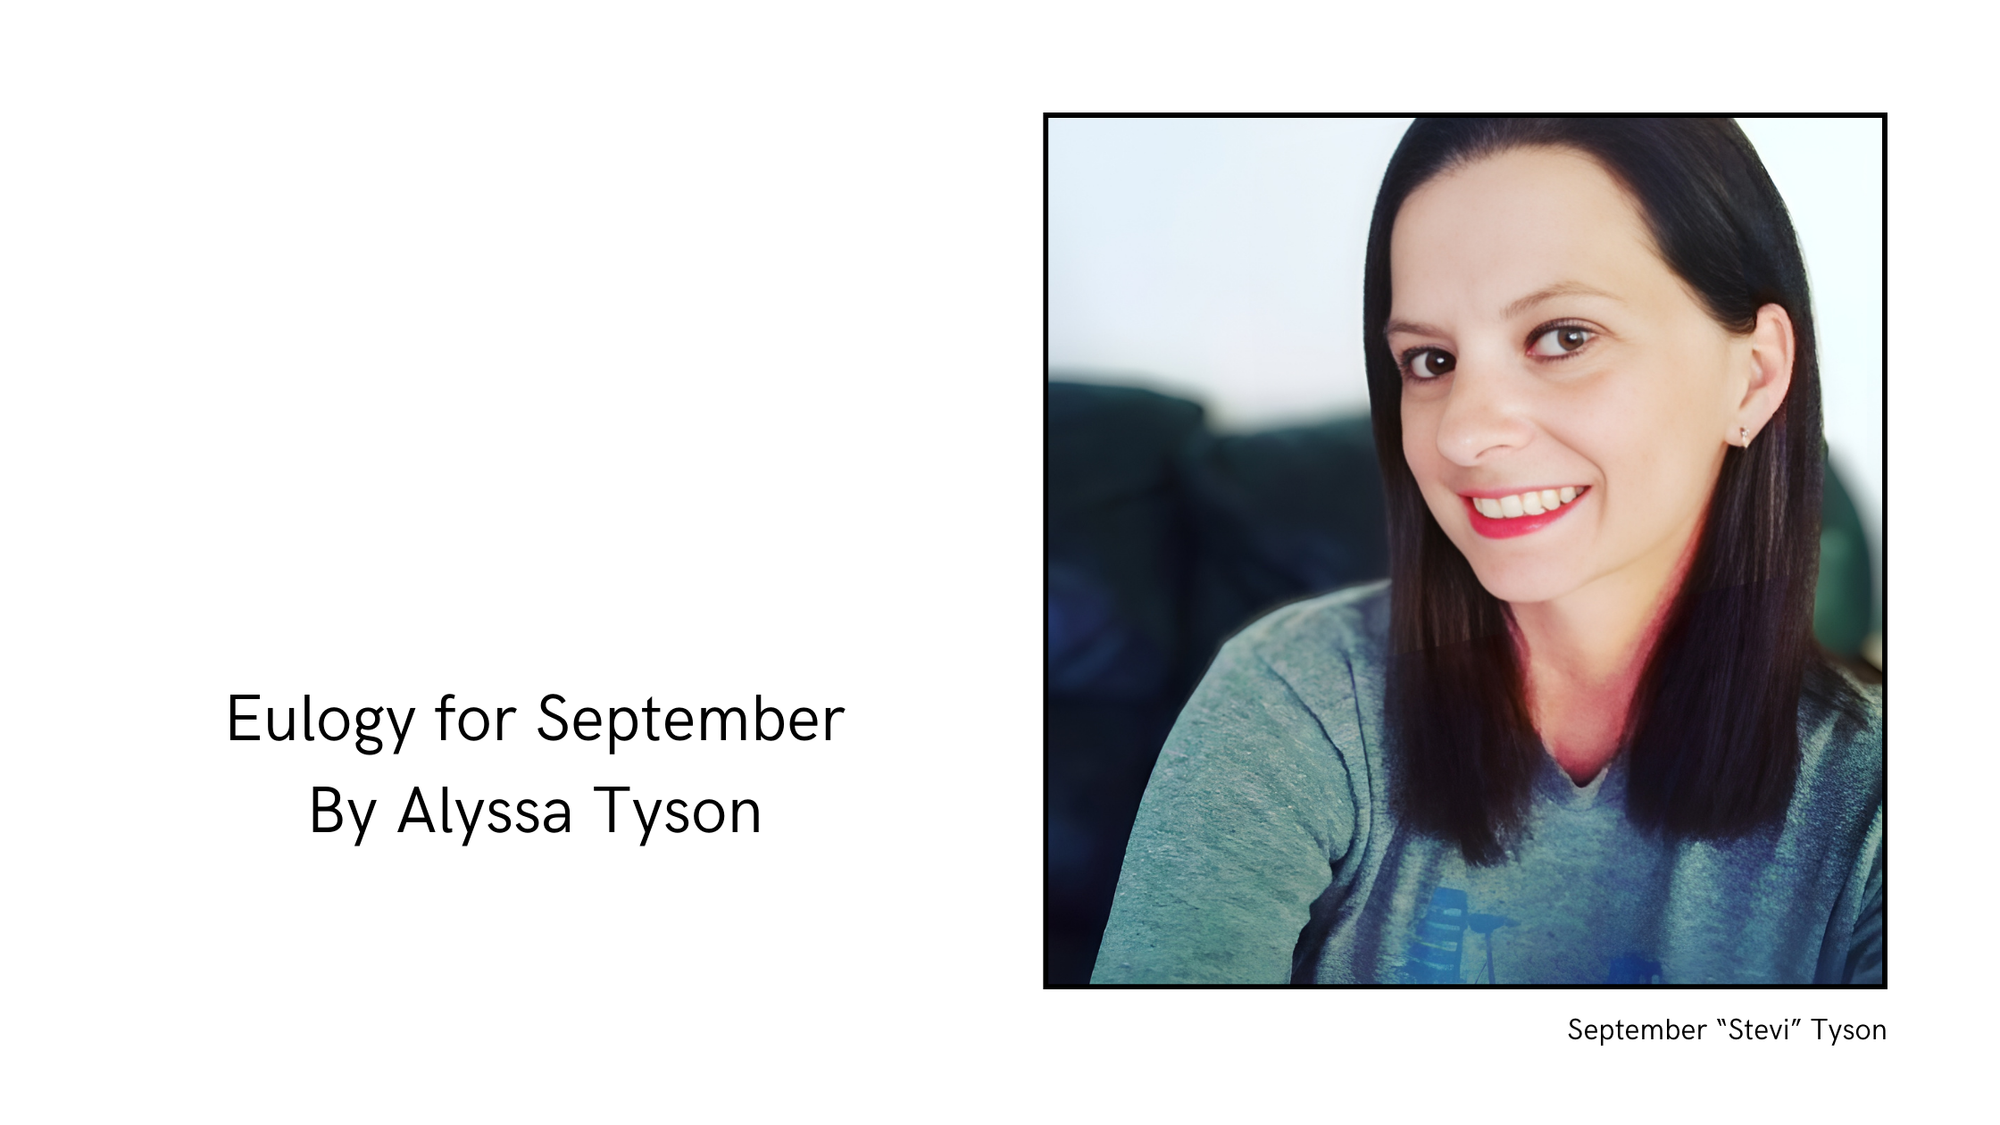 Eulogy for September By Alyssa Tyson